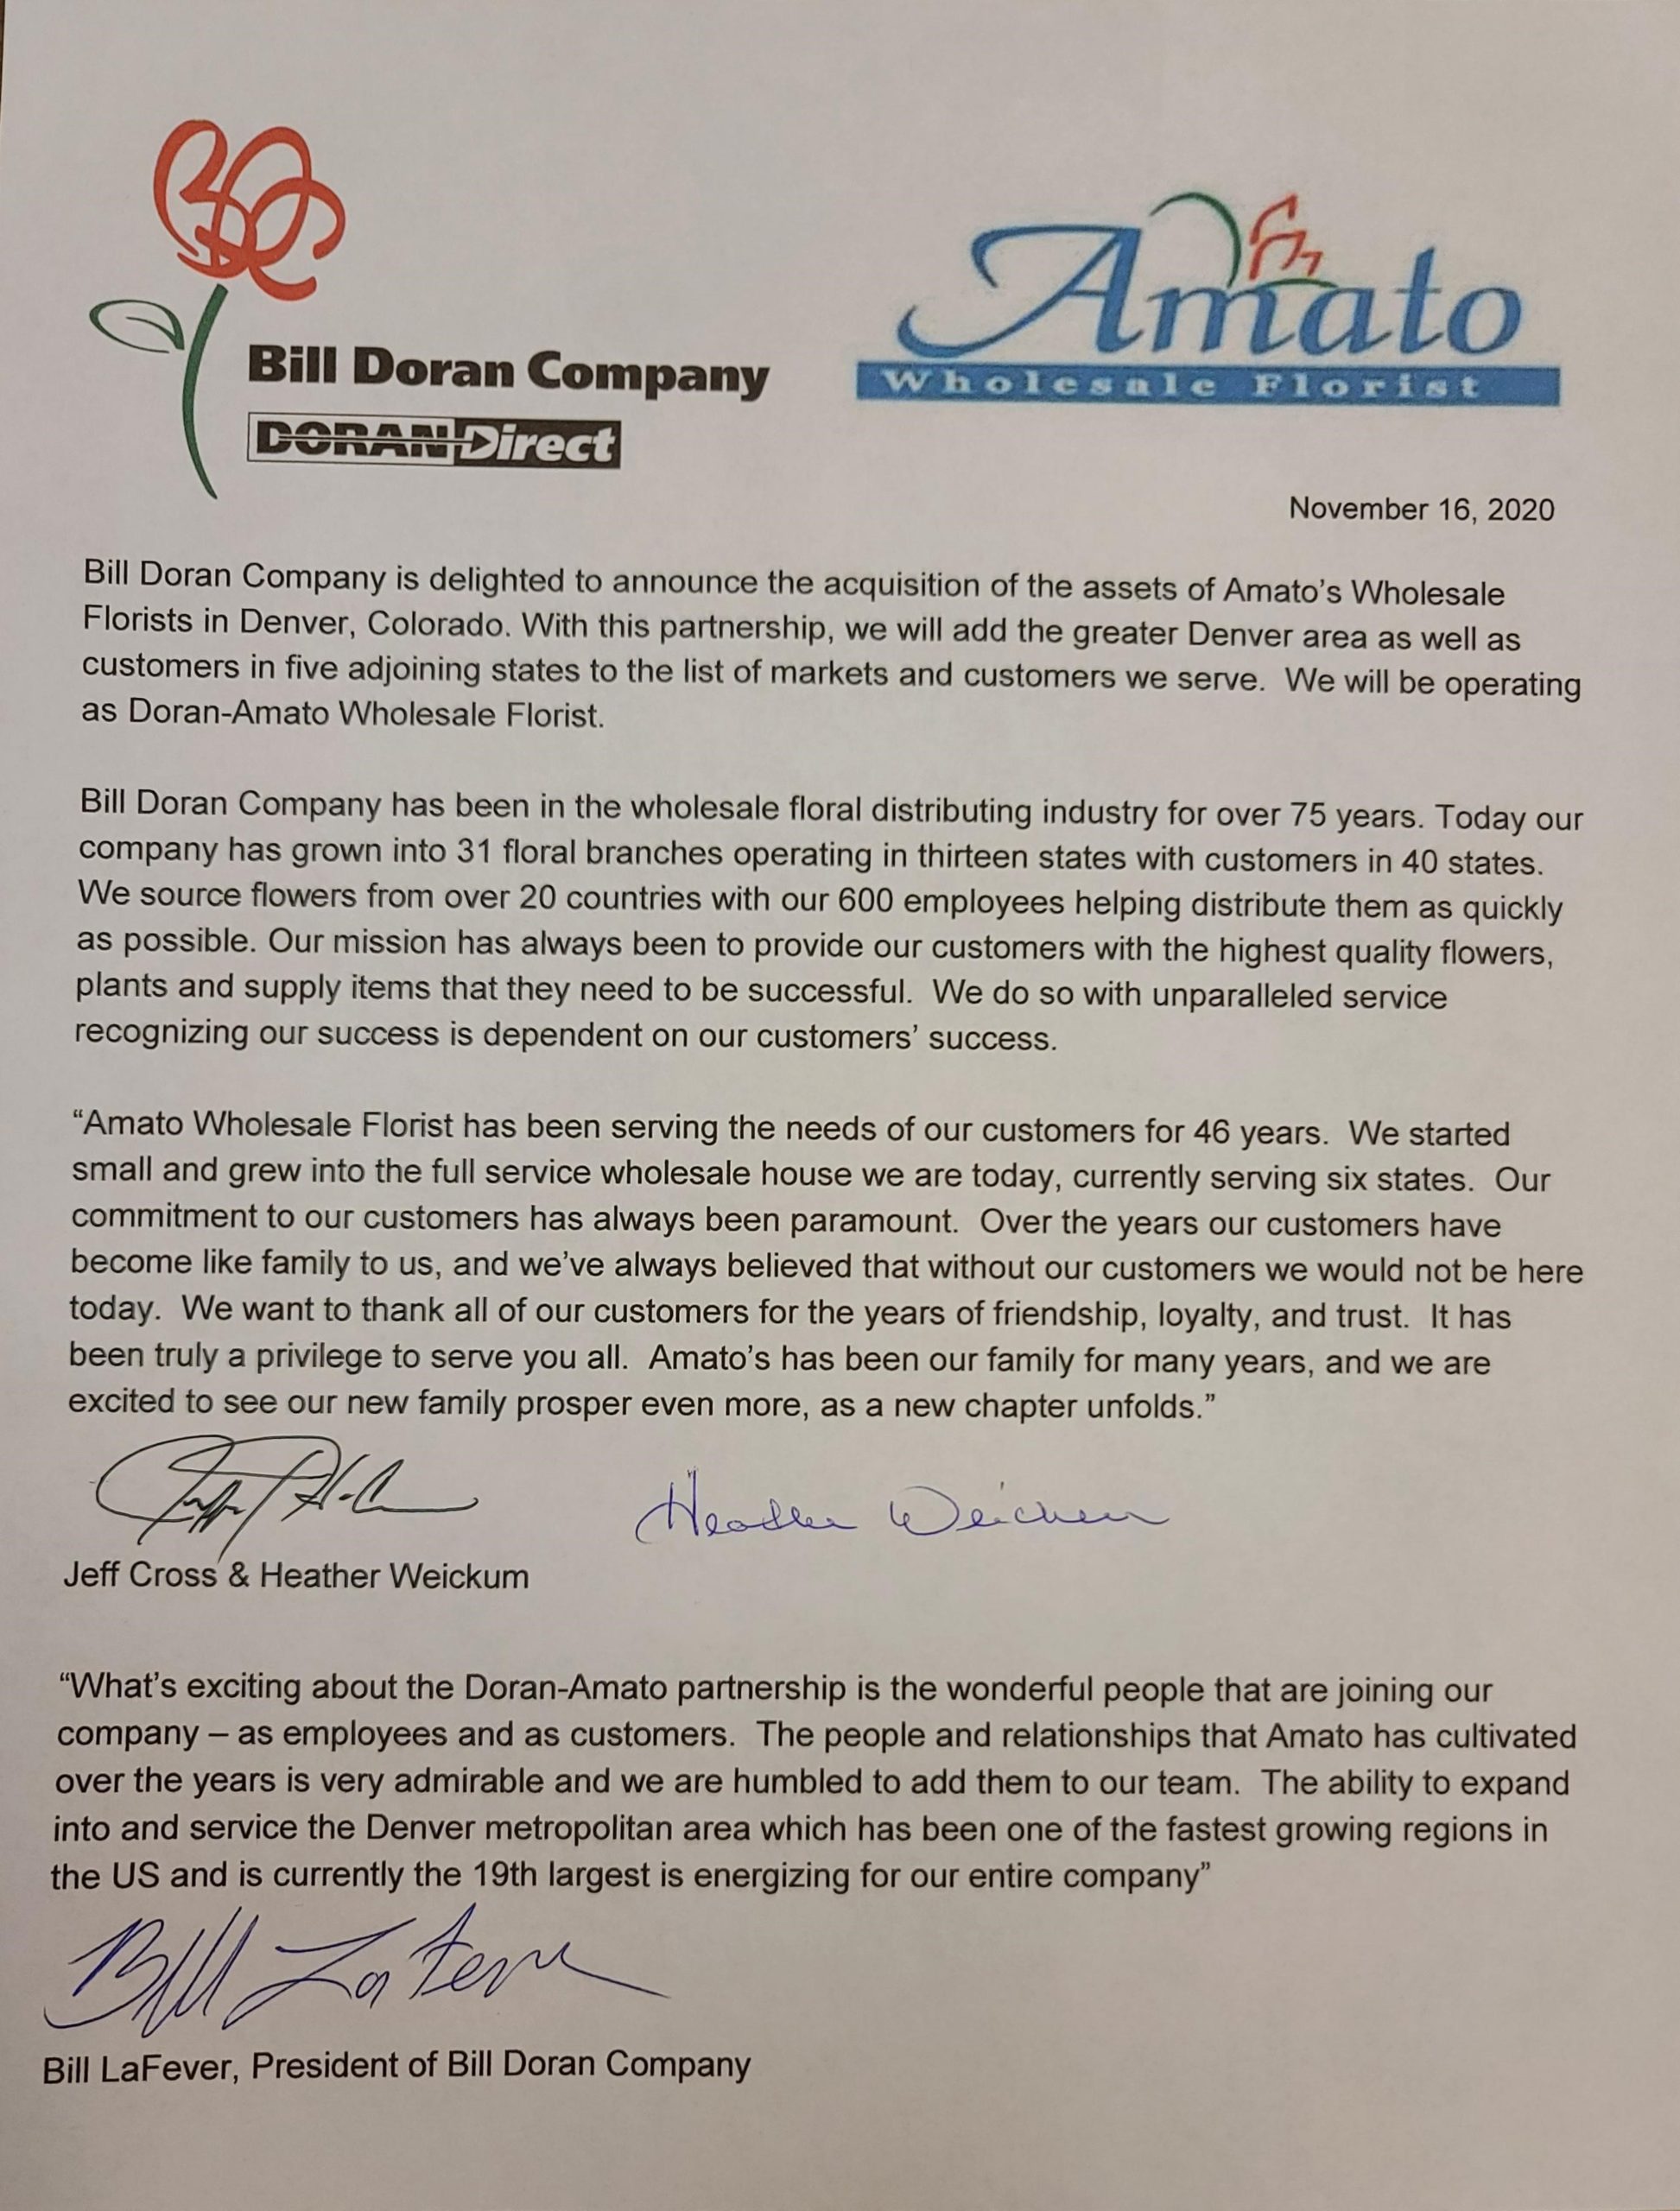 Topic: Bill Doran Company buys Amato Wholesale of Colorado